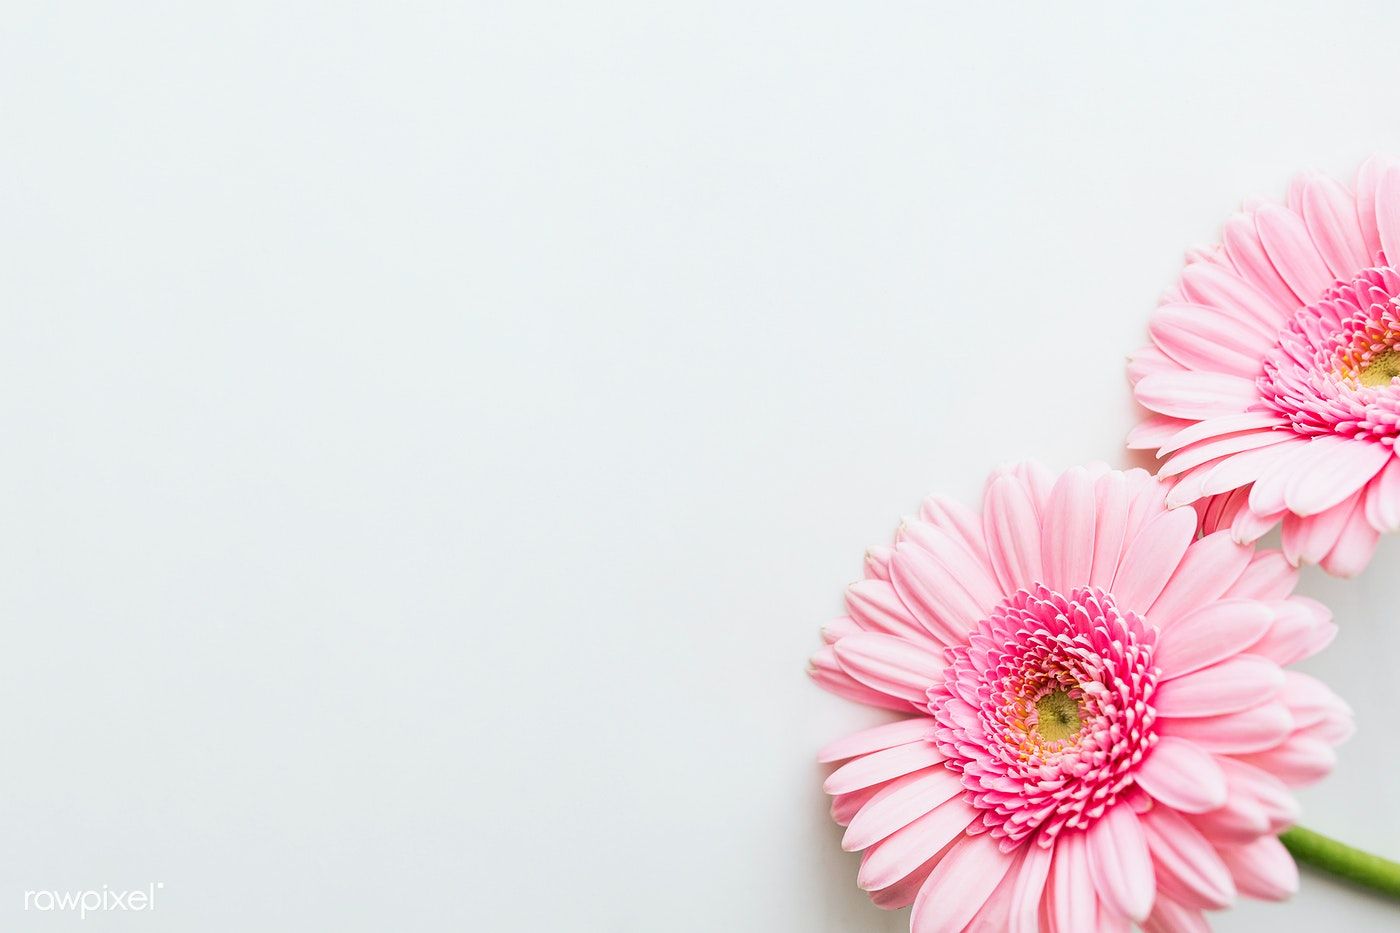 Download free image of Single light pink Gerbera daisy flower on